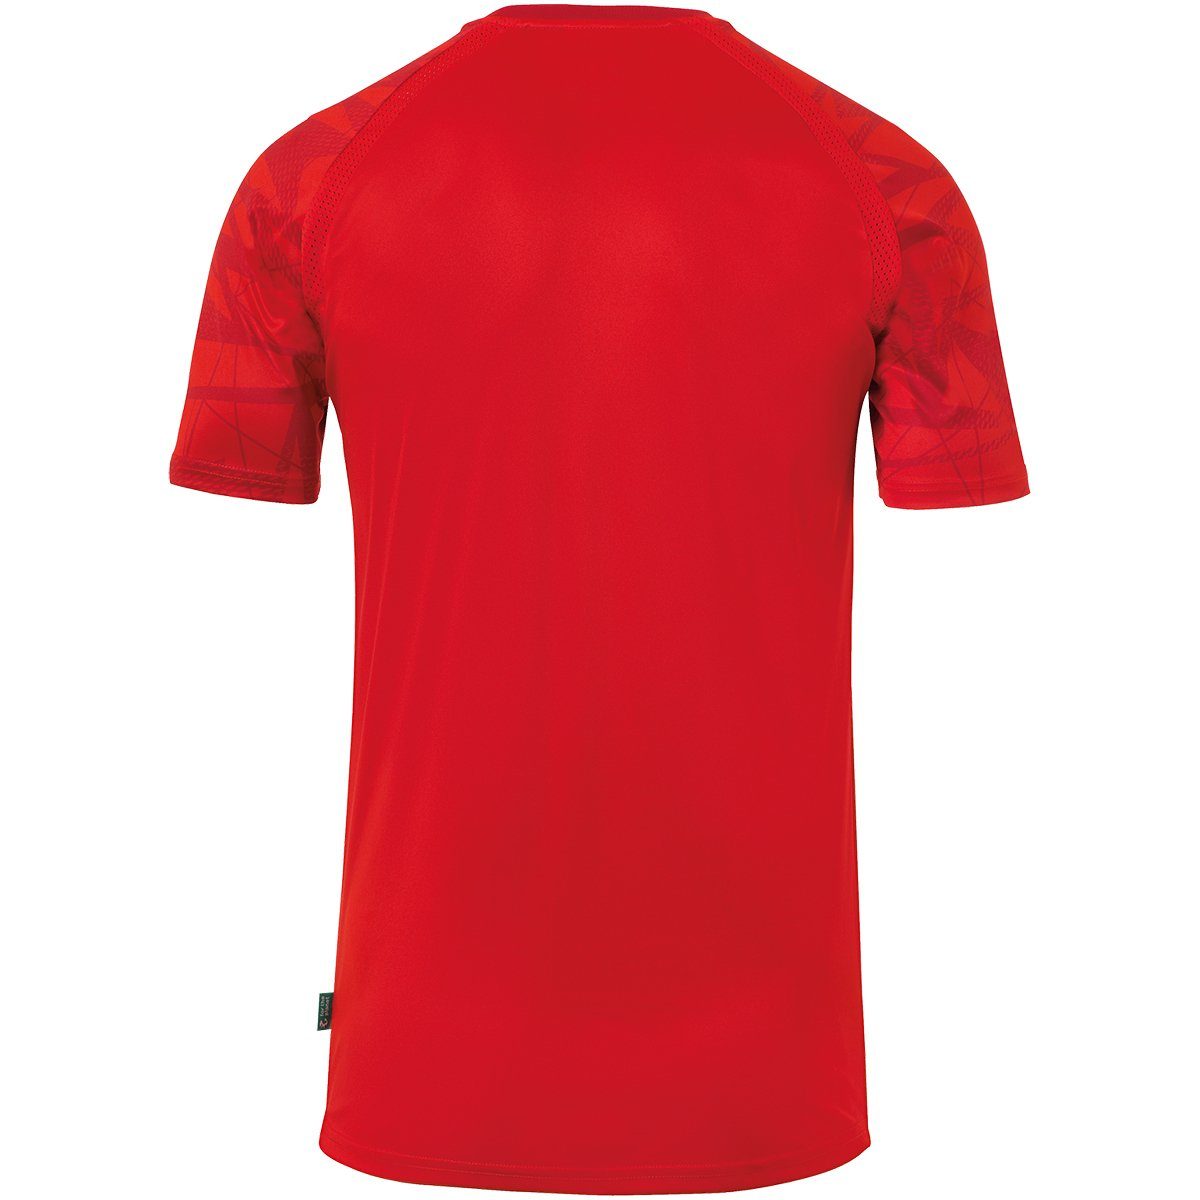 uhlsport TRIKOT Trainings-T-Shirt atmungsaktiv KURZARM GOAL rot/weiß Trainingsshirt 25 uhlsport